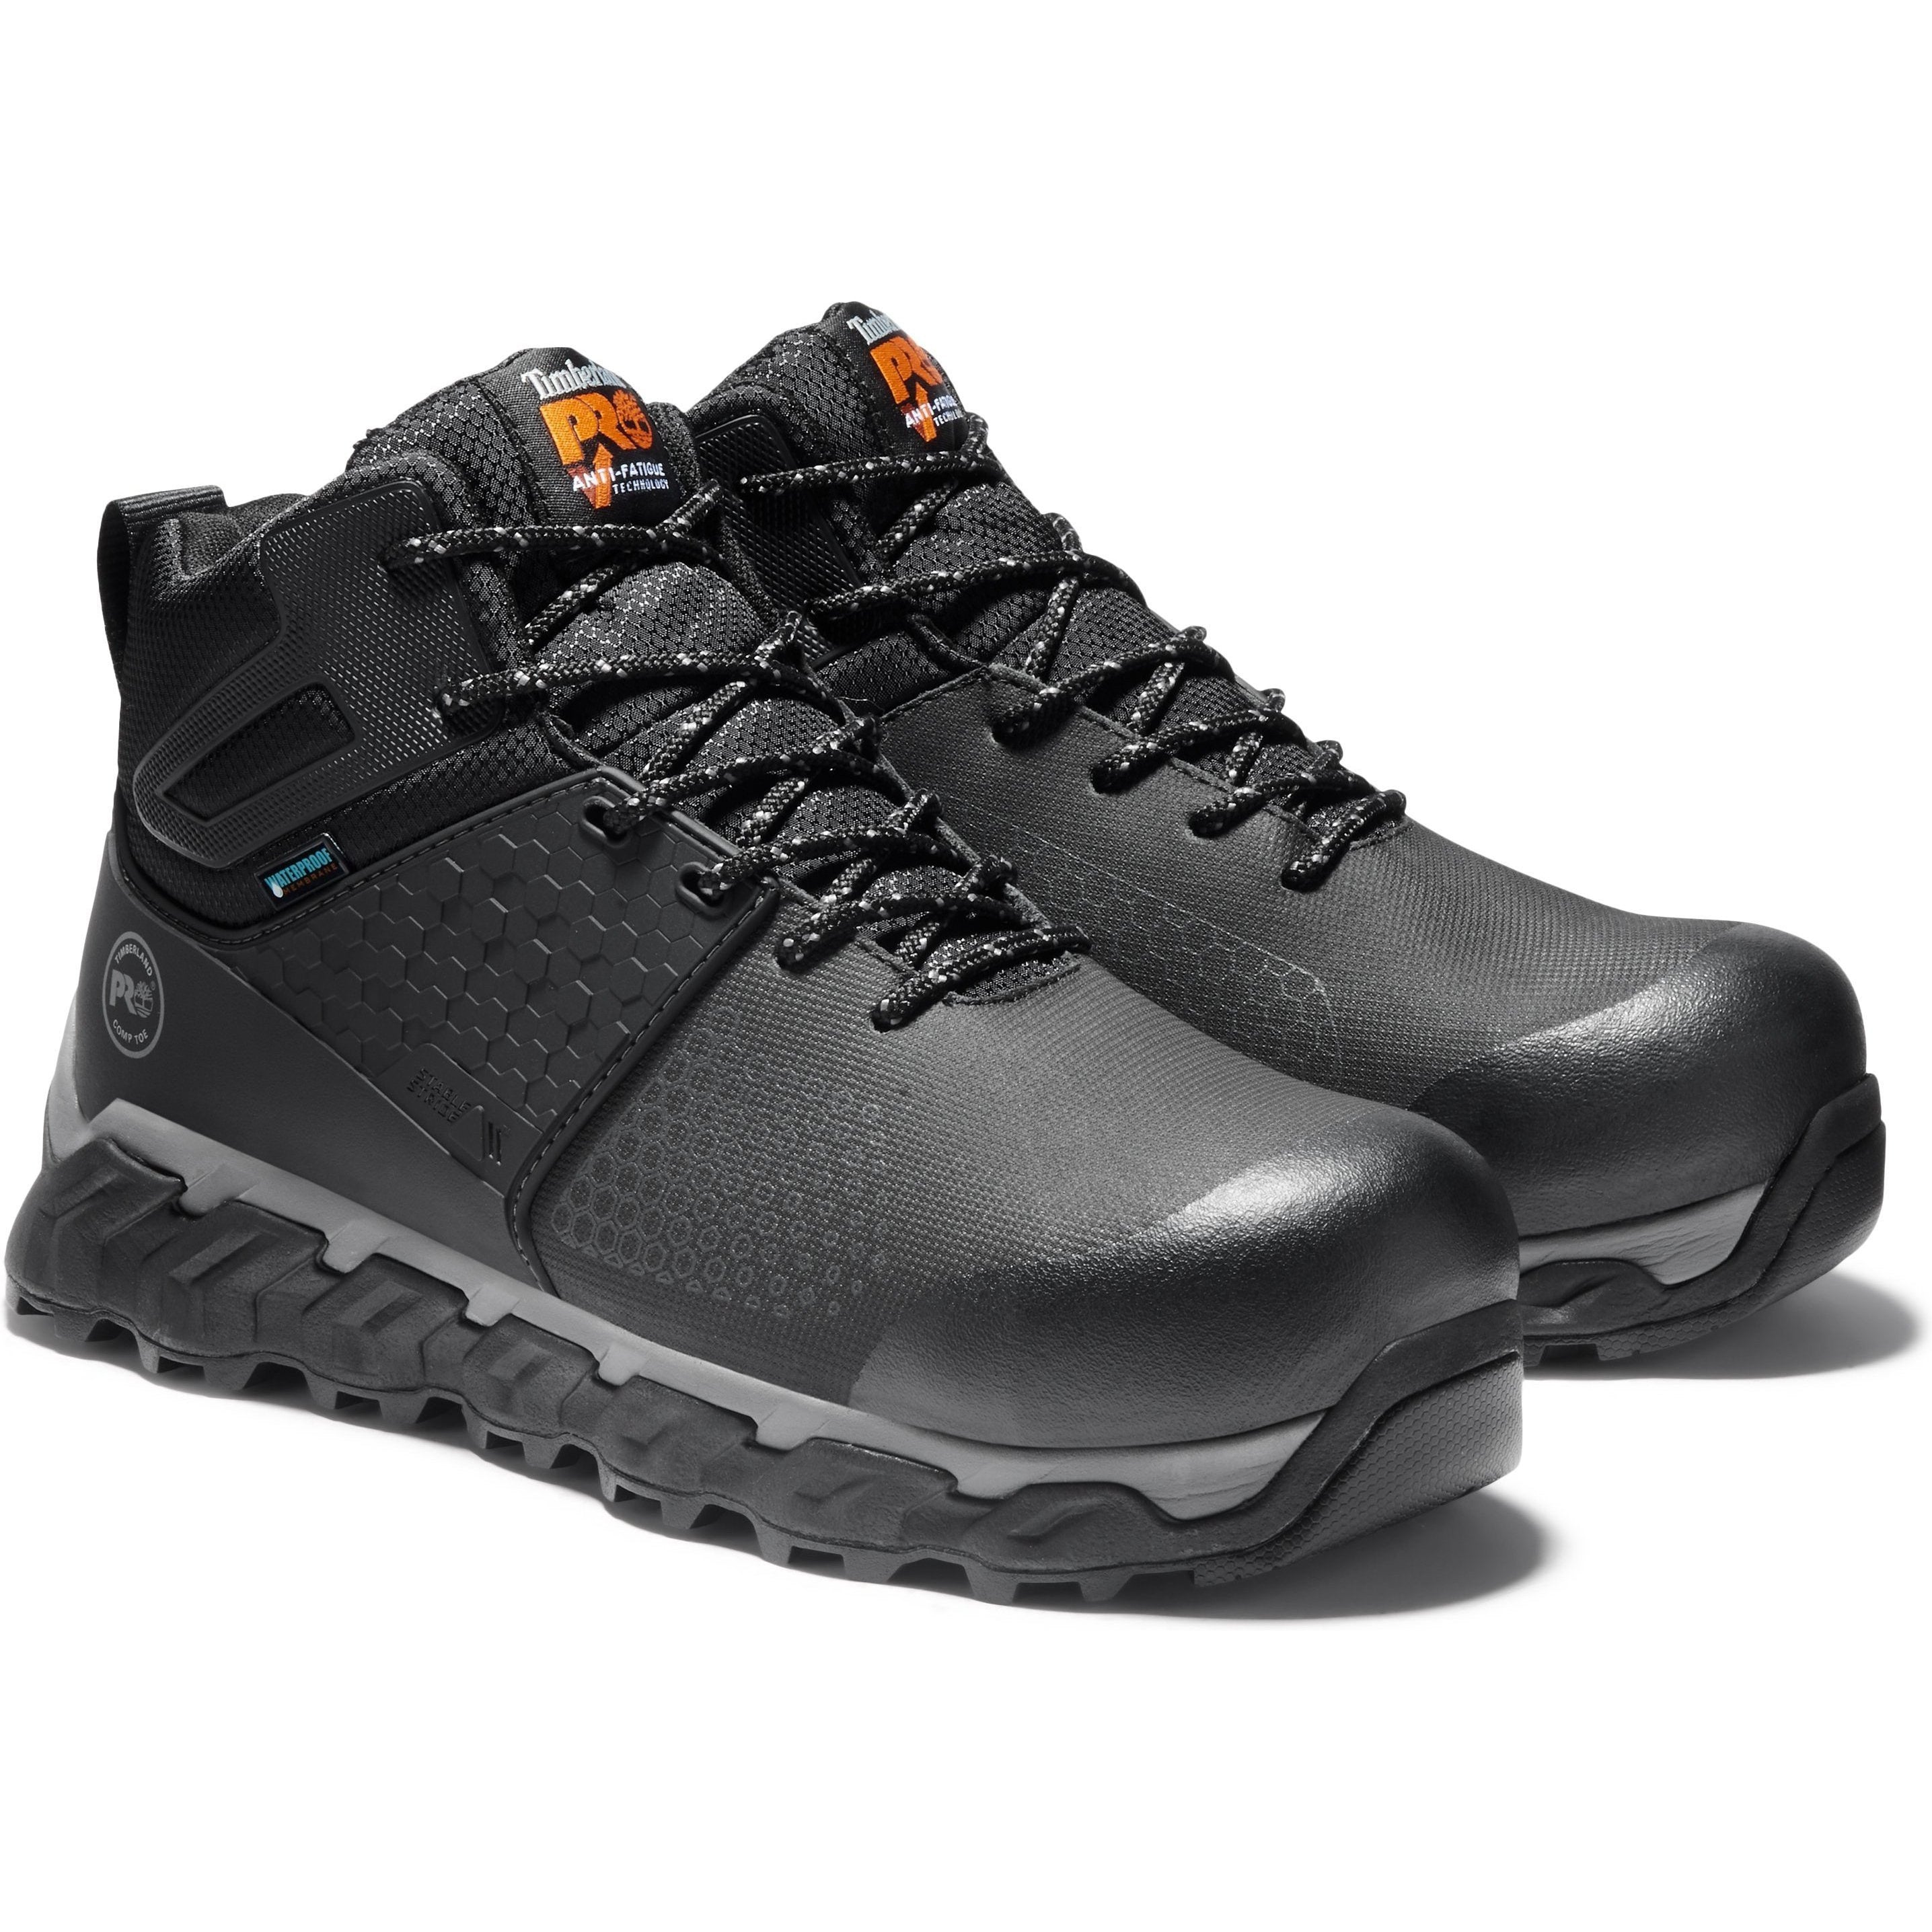 Timberland PRO Ridgework Mid Comp Toe WP Hiker Work Boot Black - TB0A1KBW001 8.5 / Medium / Black - Overlook Boots